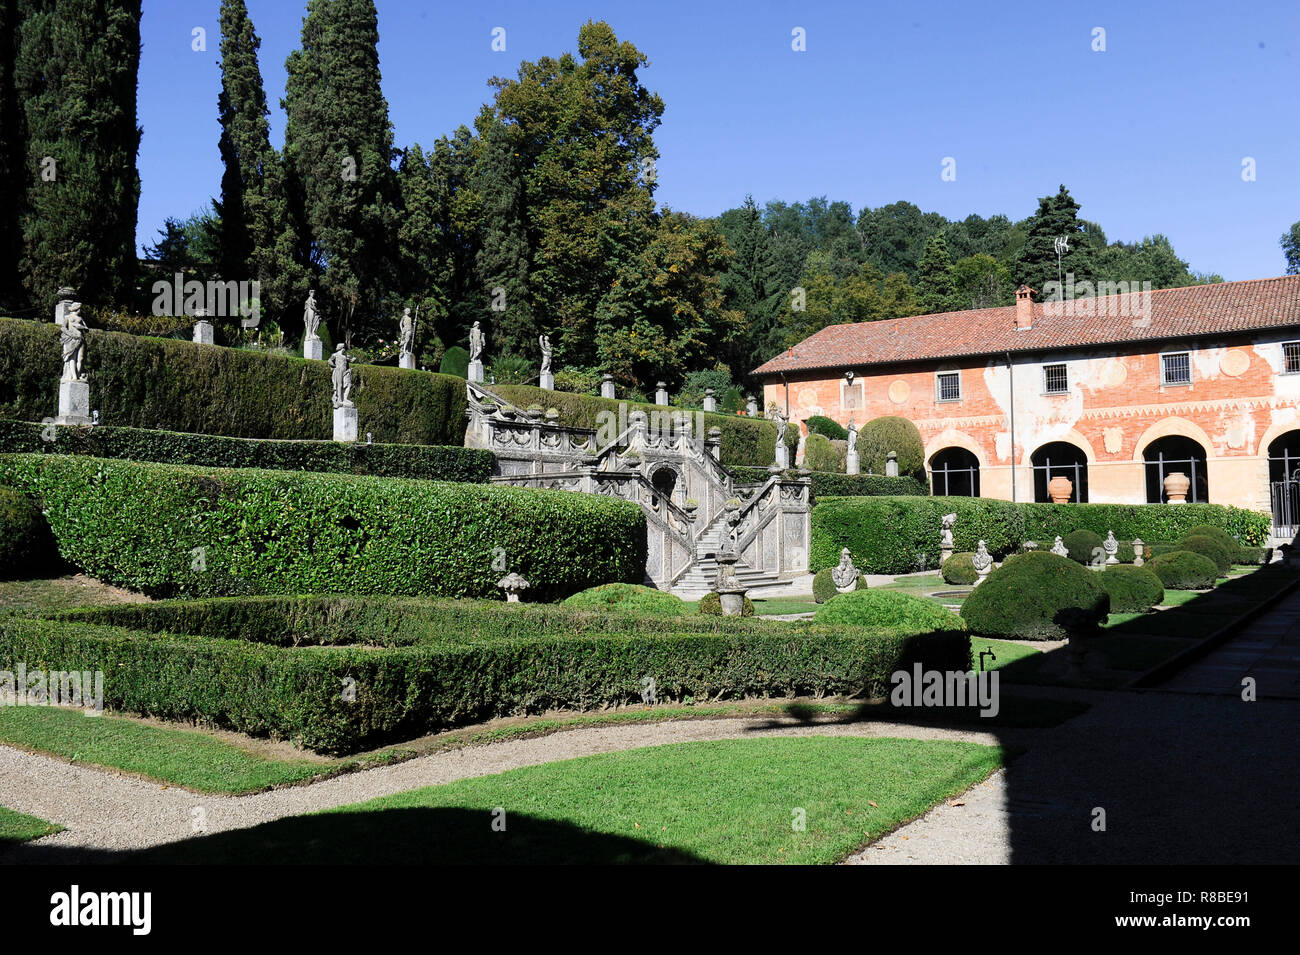 Italy, Lombardy, Lecco, Olgiate Molgora, Somma Picenardi villa in 17th century Barocchetto Lombardo style with English garden and Italian style Stock Photo